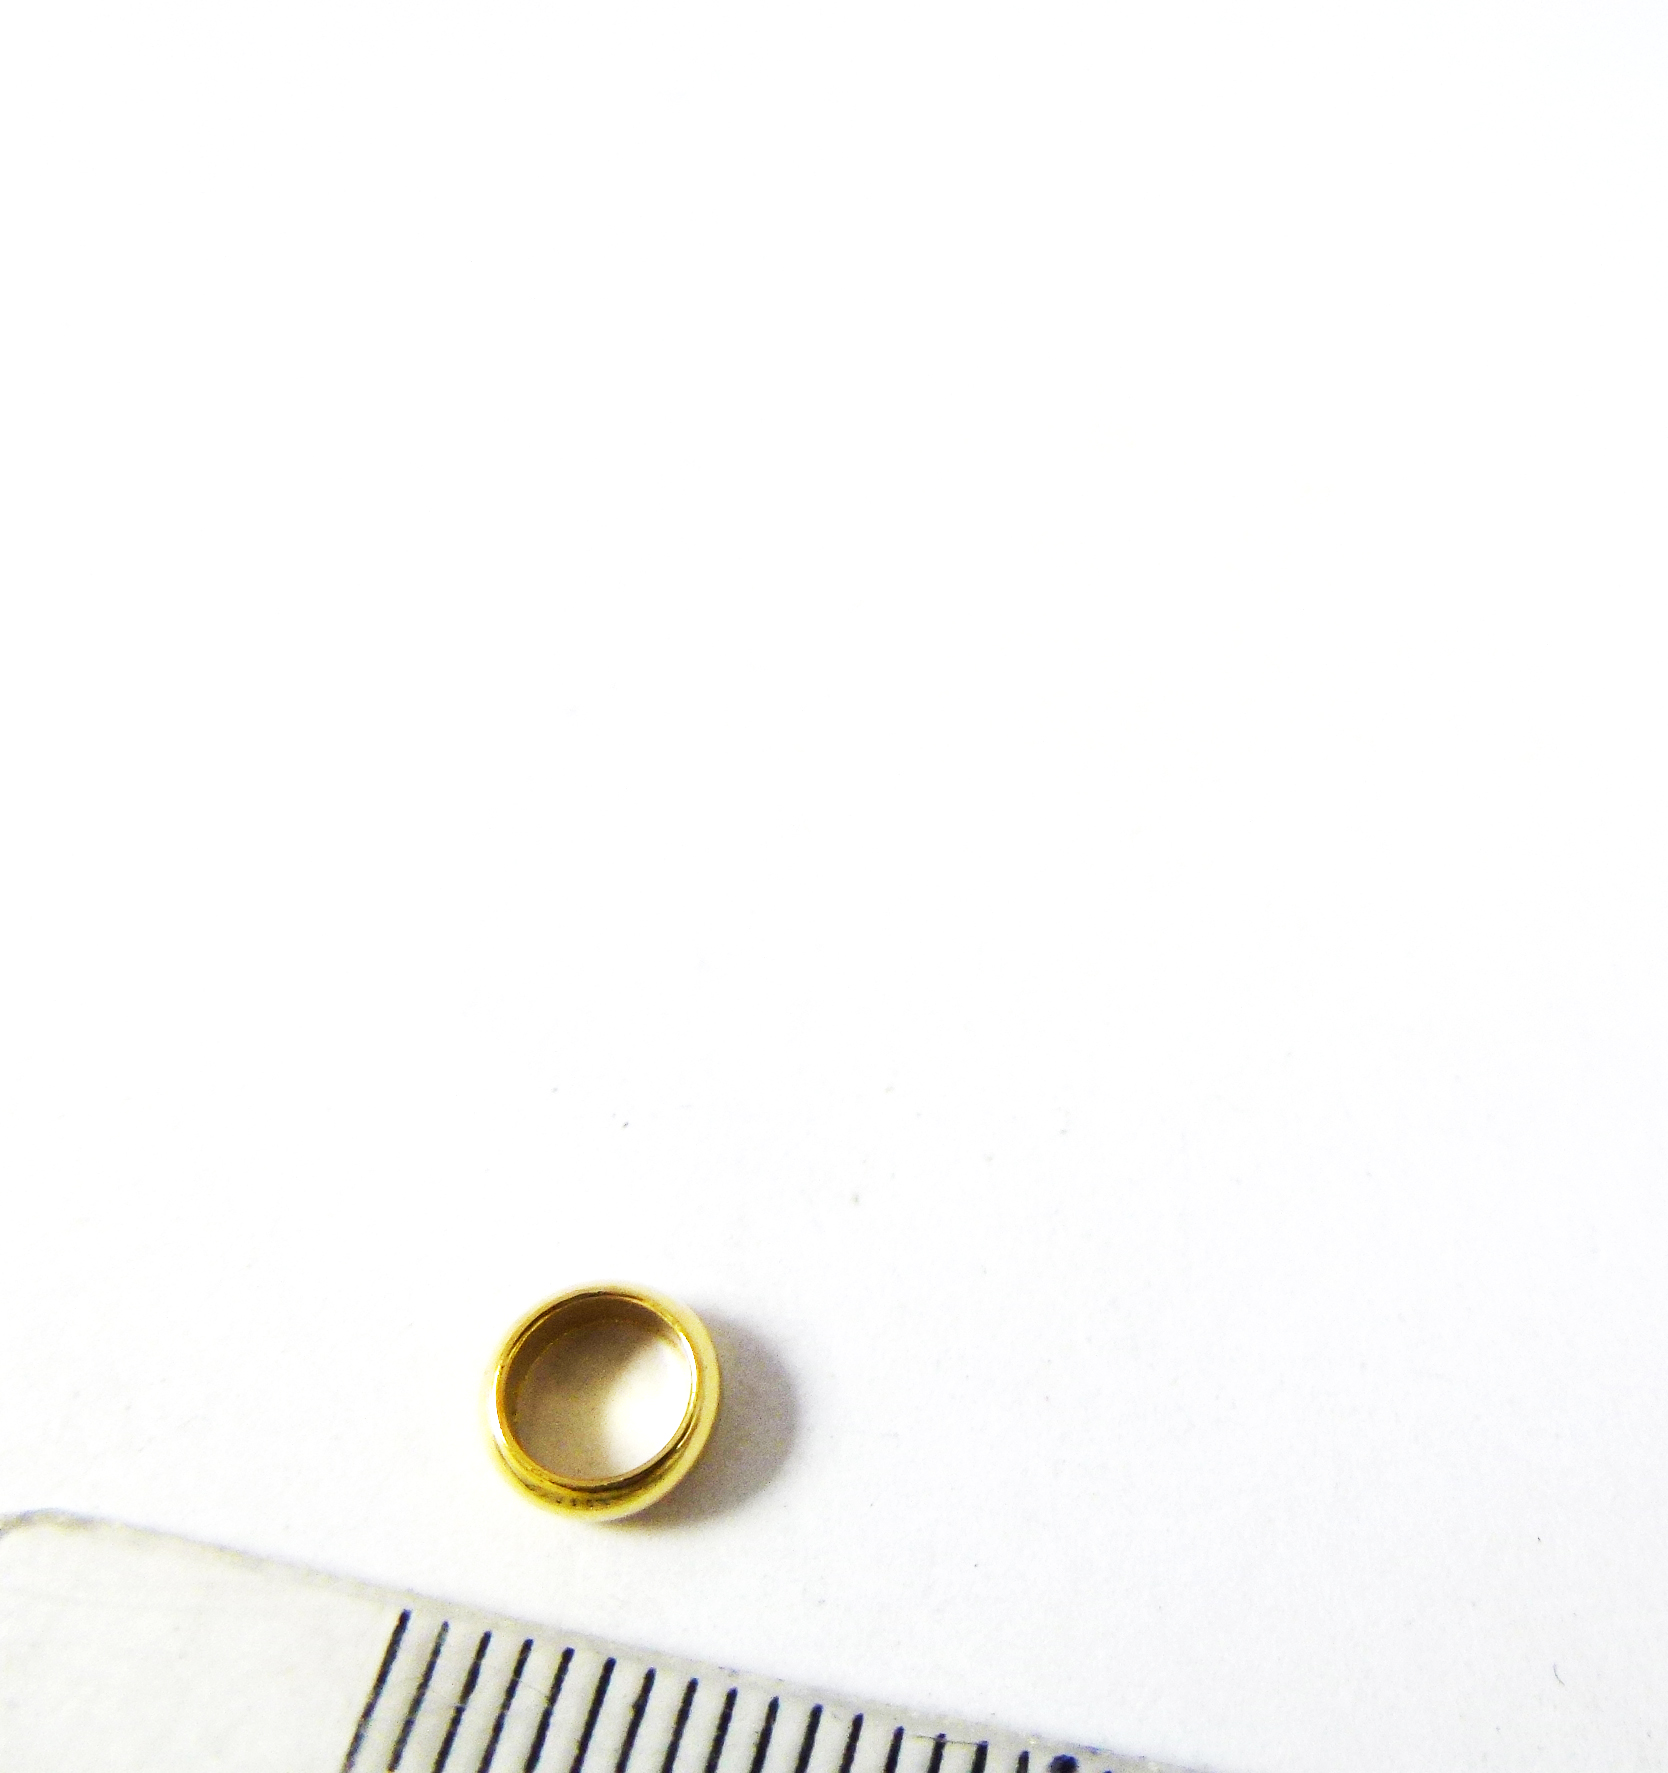 5mm銅鍍金色中洞圓圈隔珠